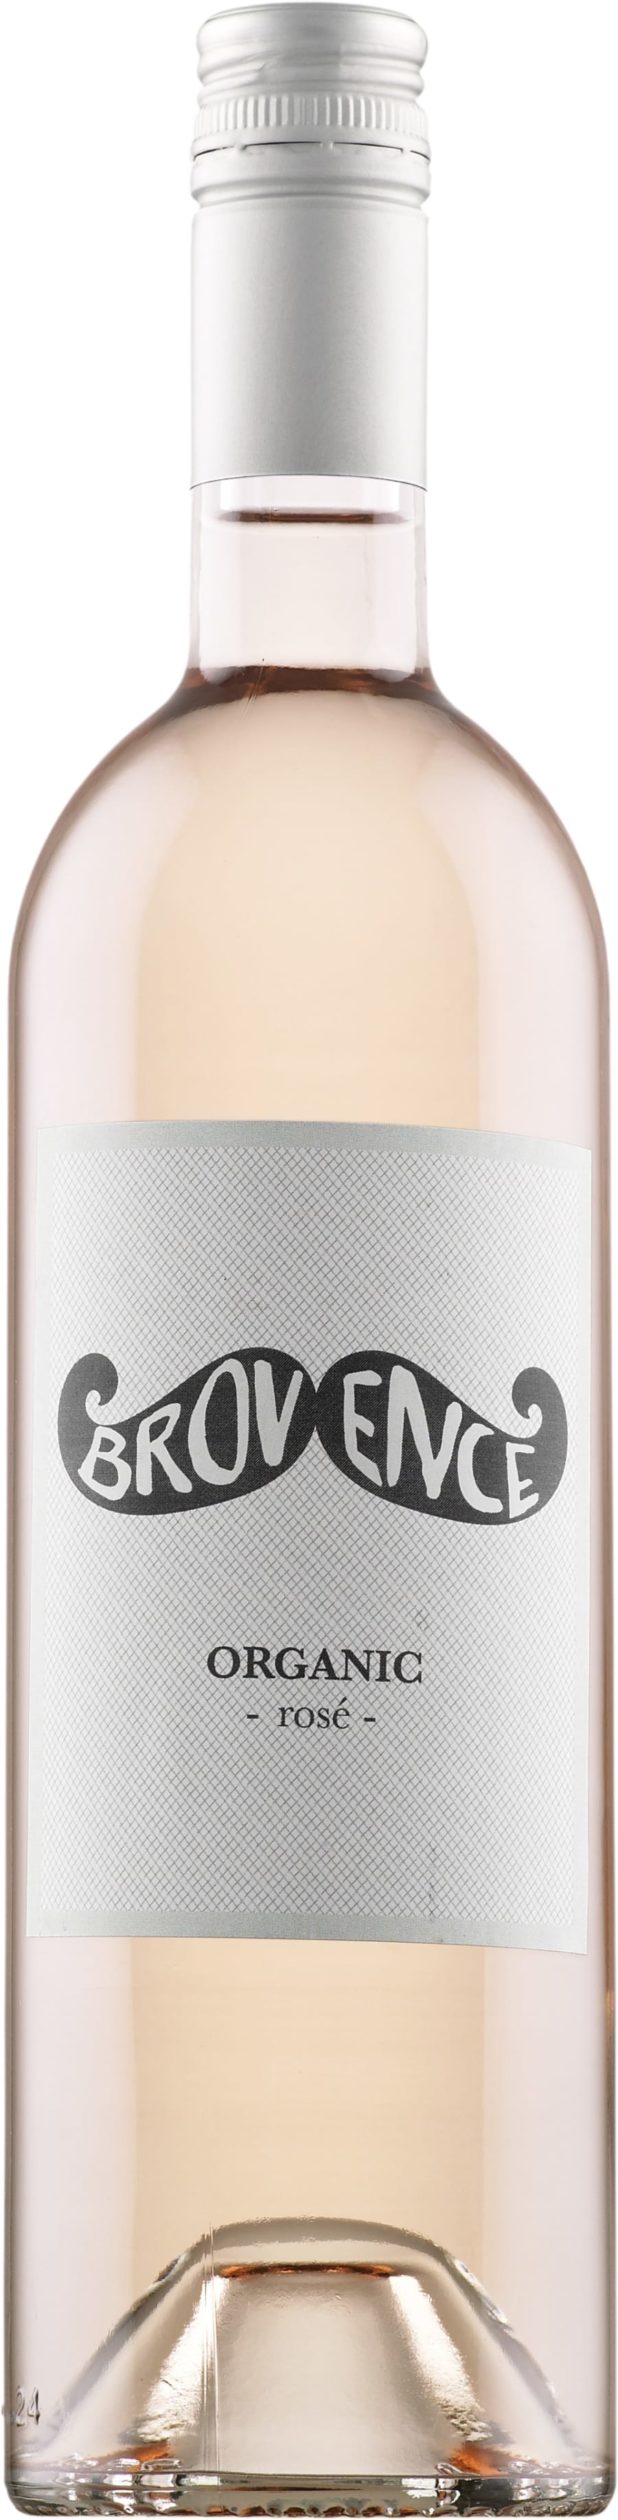 Brovence Organic Rosé 2019